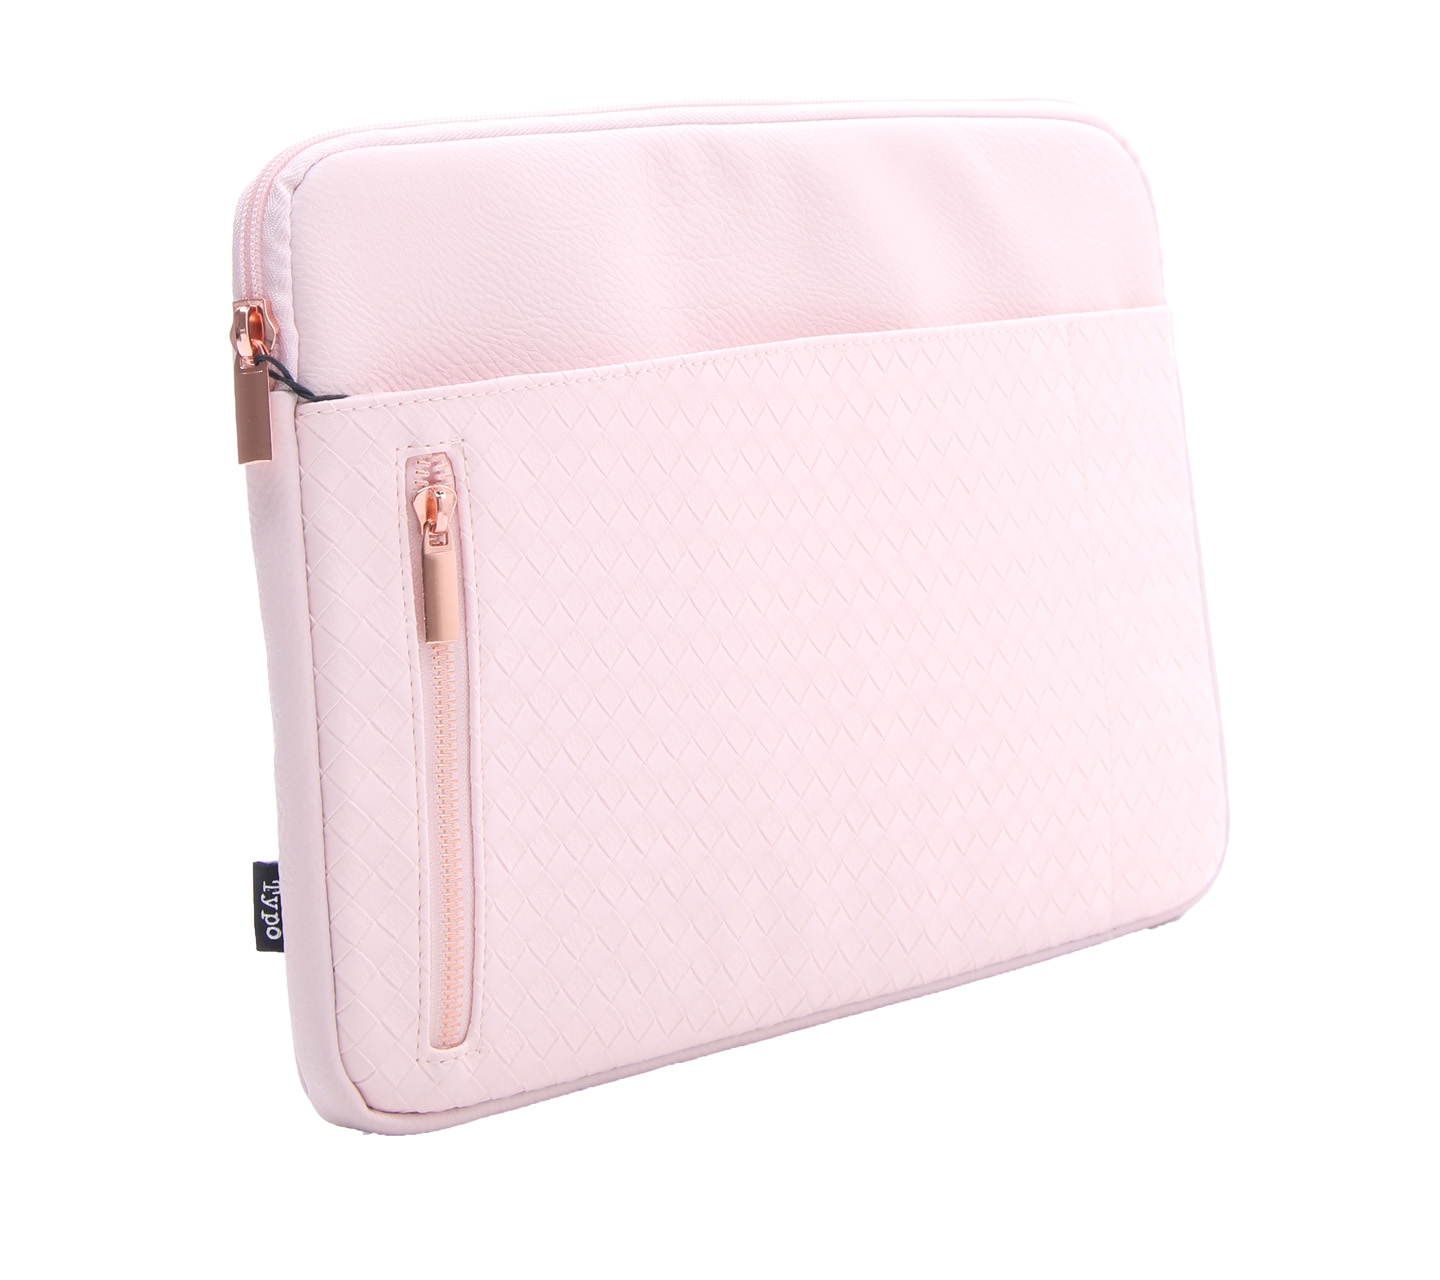 Typo Pink Laptop Case Intrecciato Leather Pouch